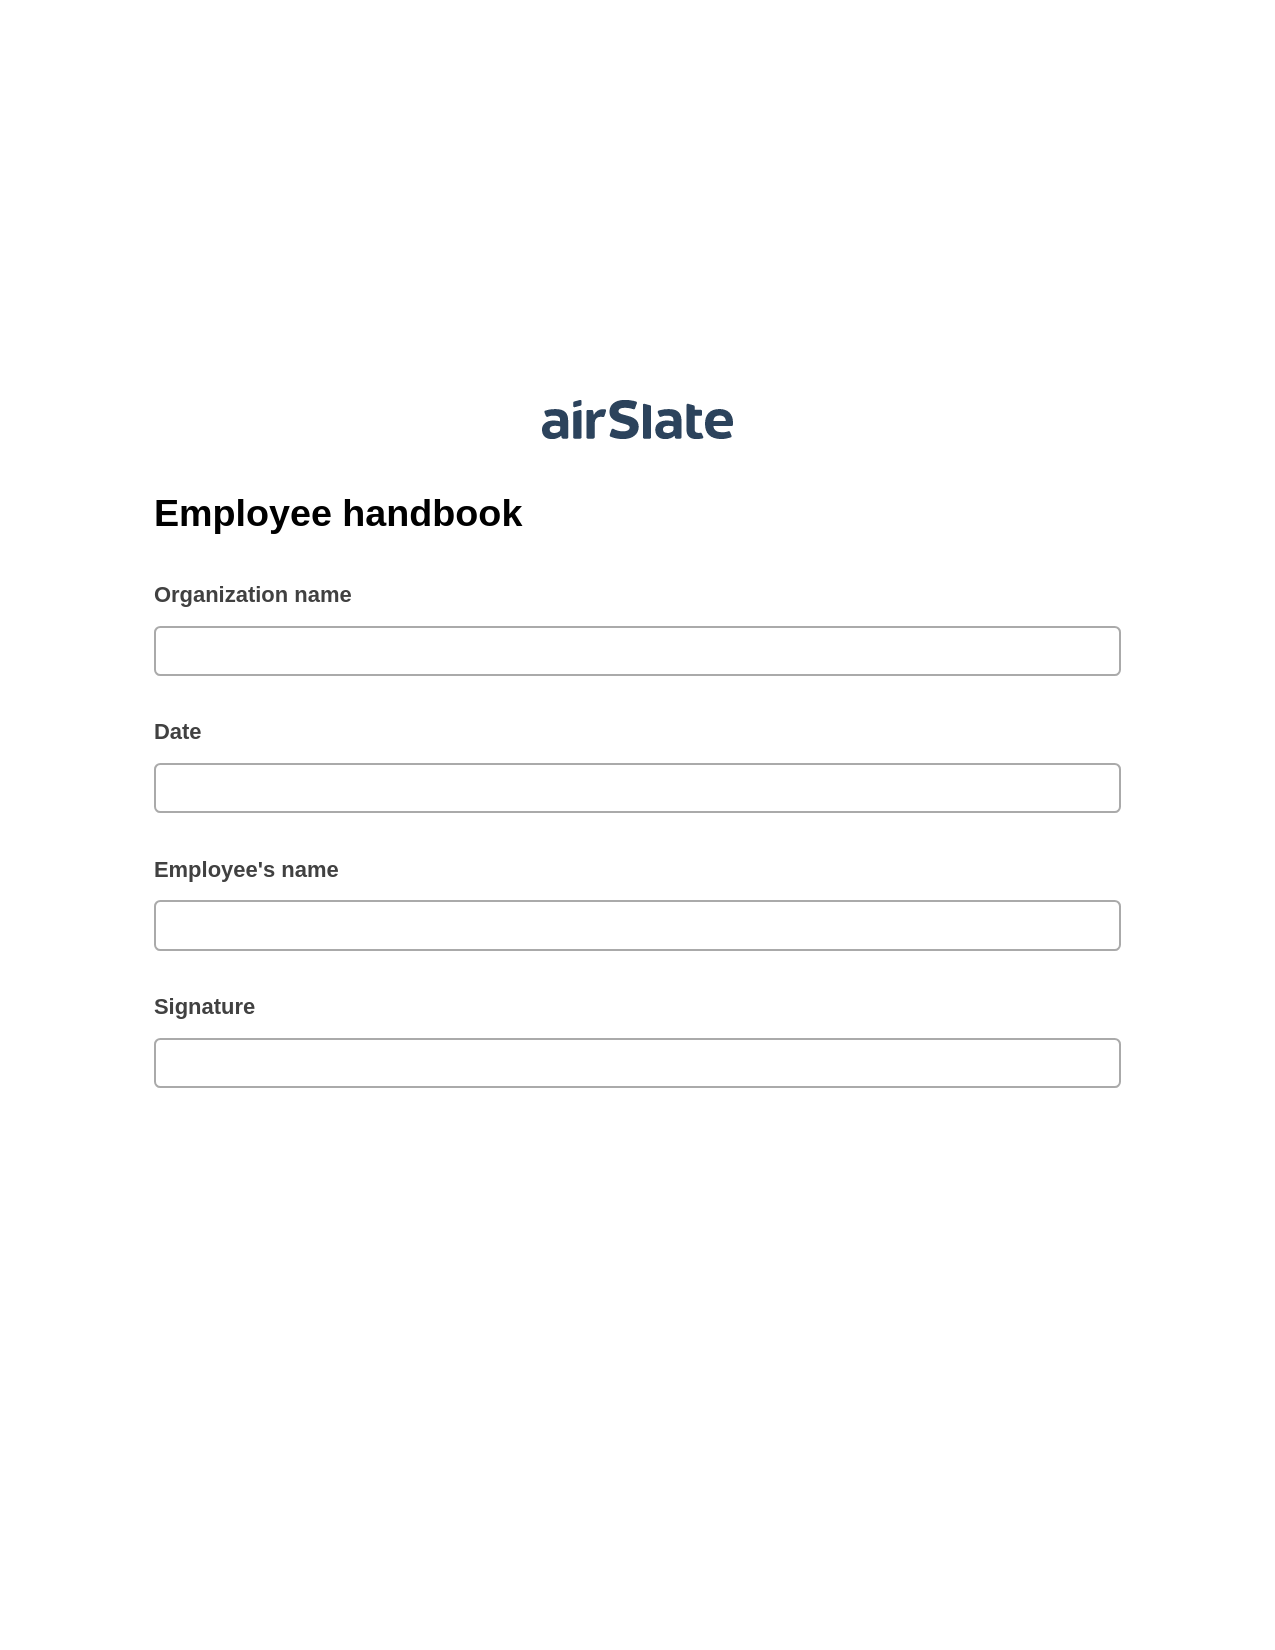 Employee handbook Pre-fill from MySQL Bot, Create Slate Reminder Bot, Slack Two-Way Binding Bot